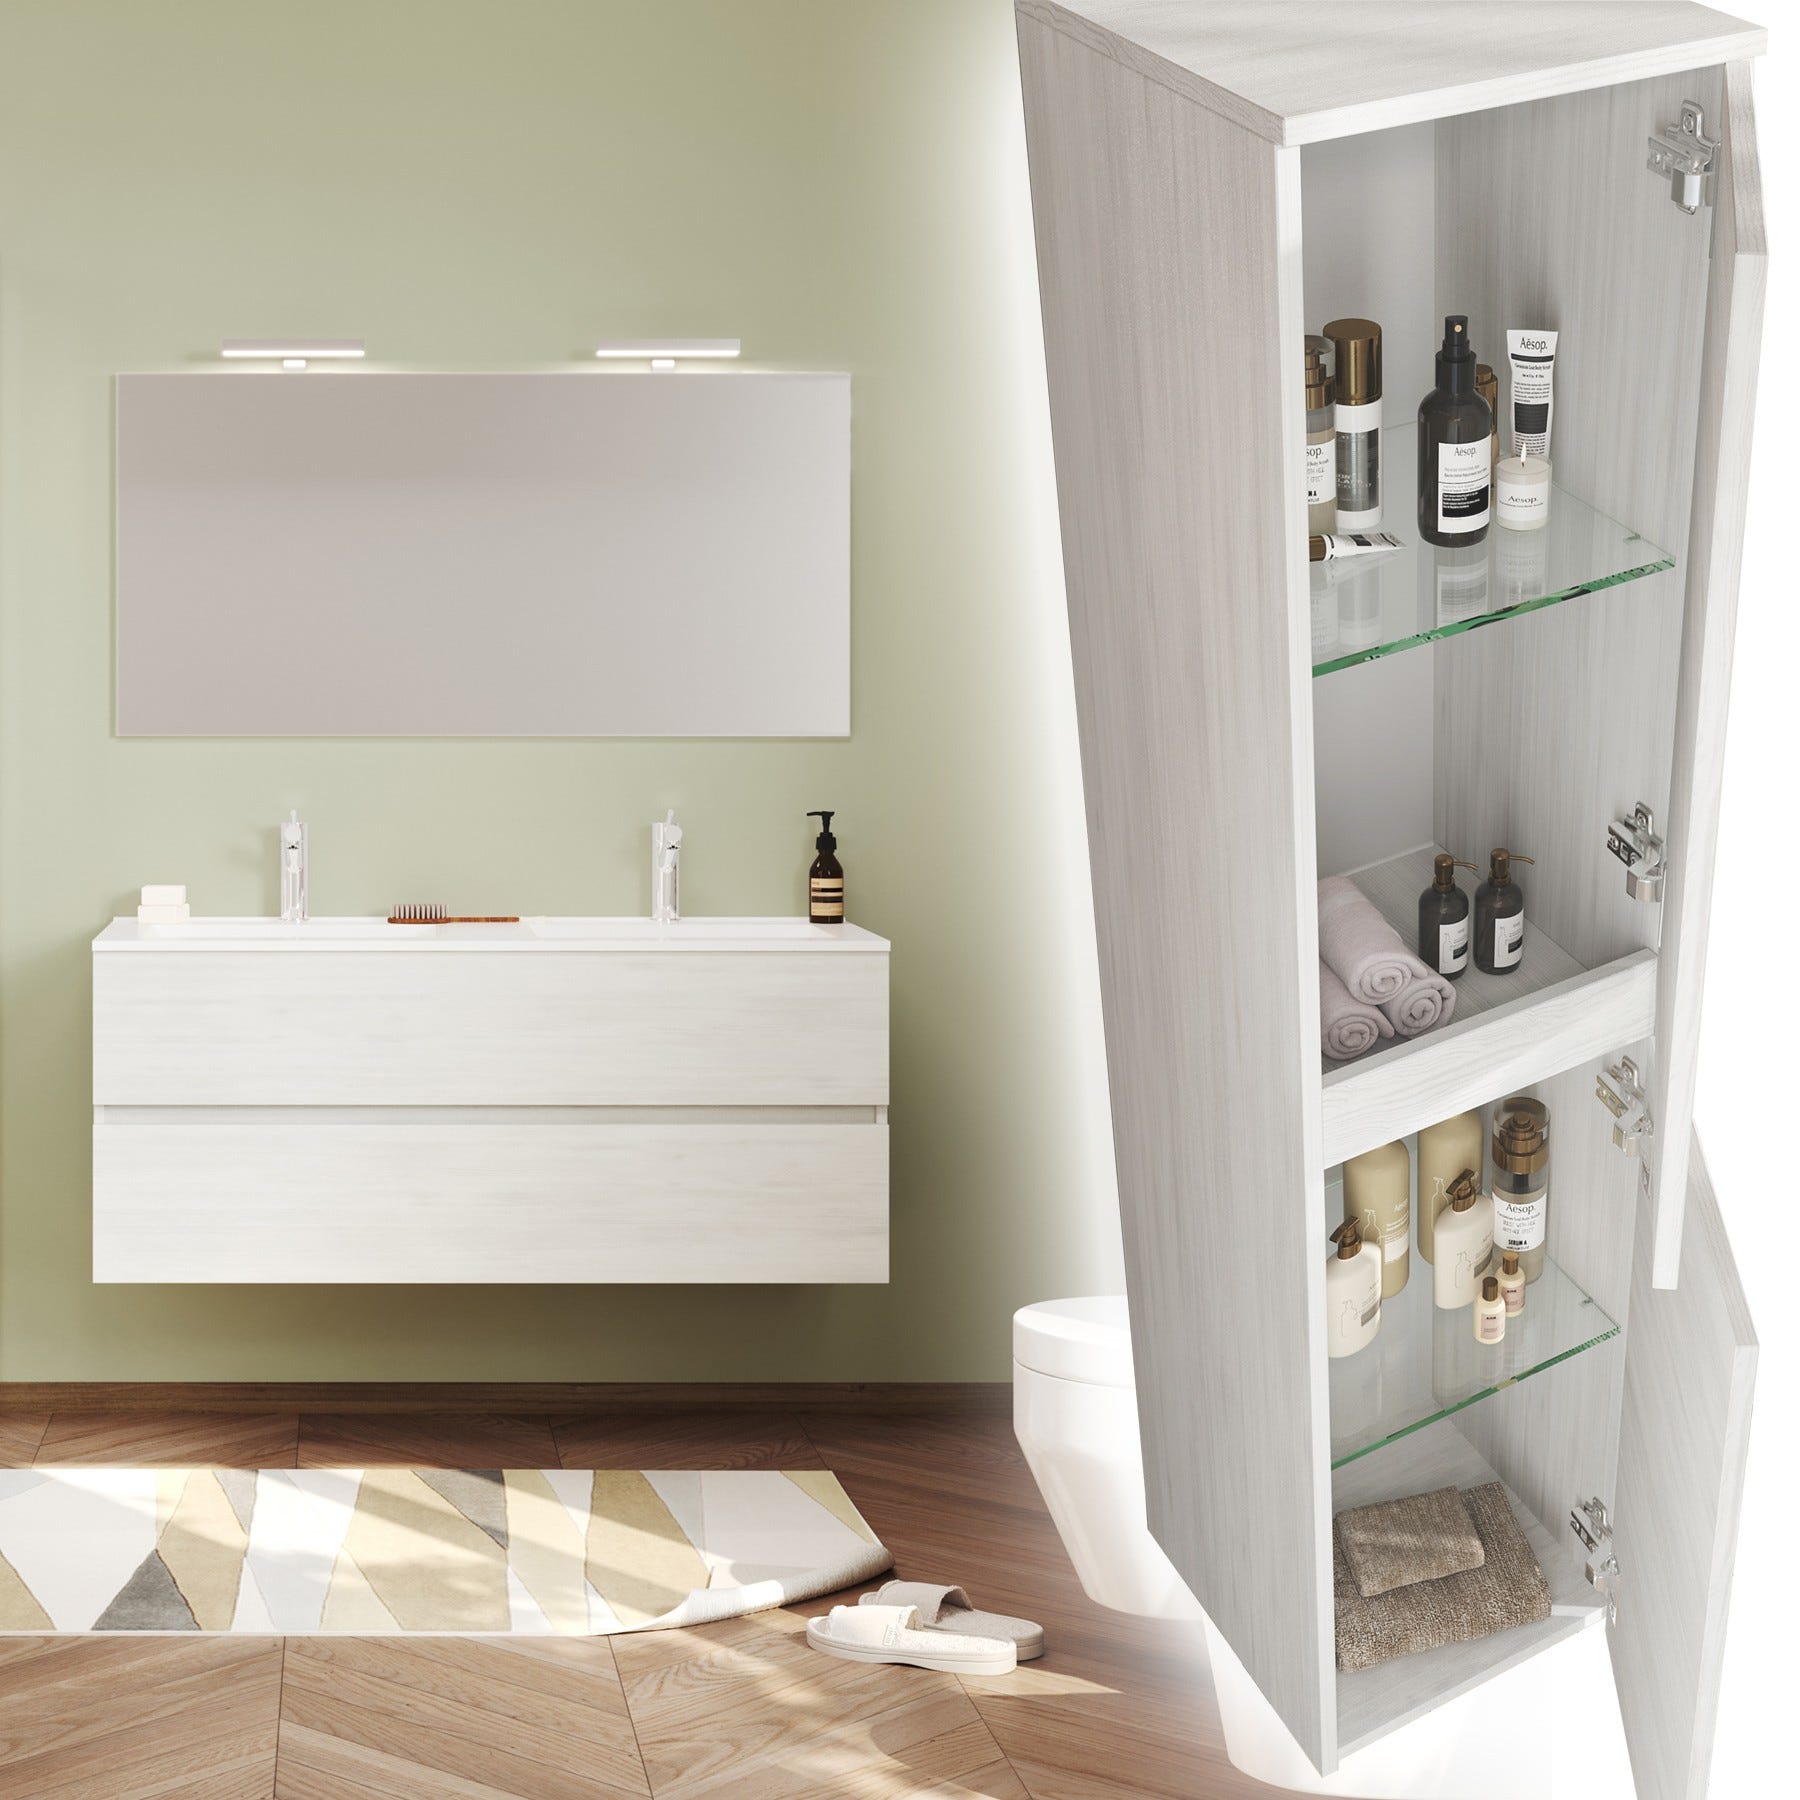 EASY Meuble salle de bain double vasque 2 tiroirs Chêne clair largeur 120 cm + miroir + colonne 1